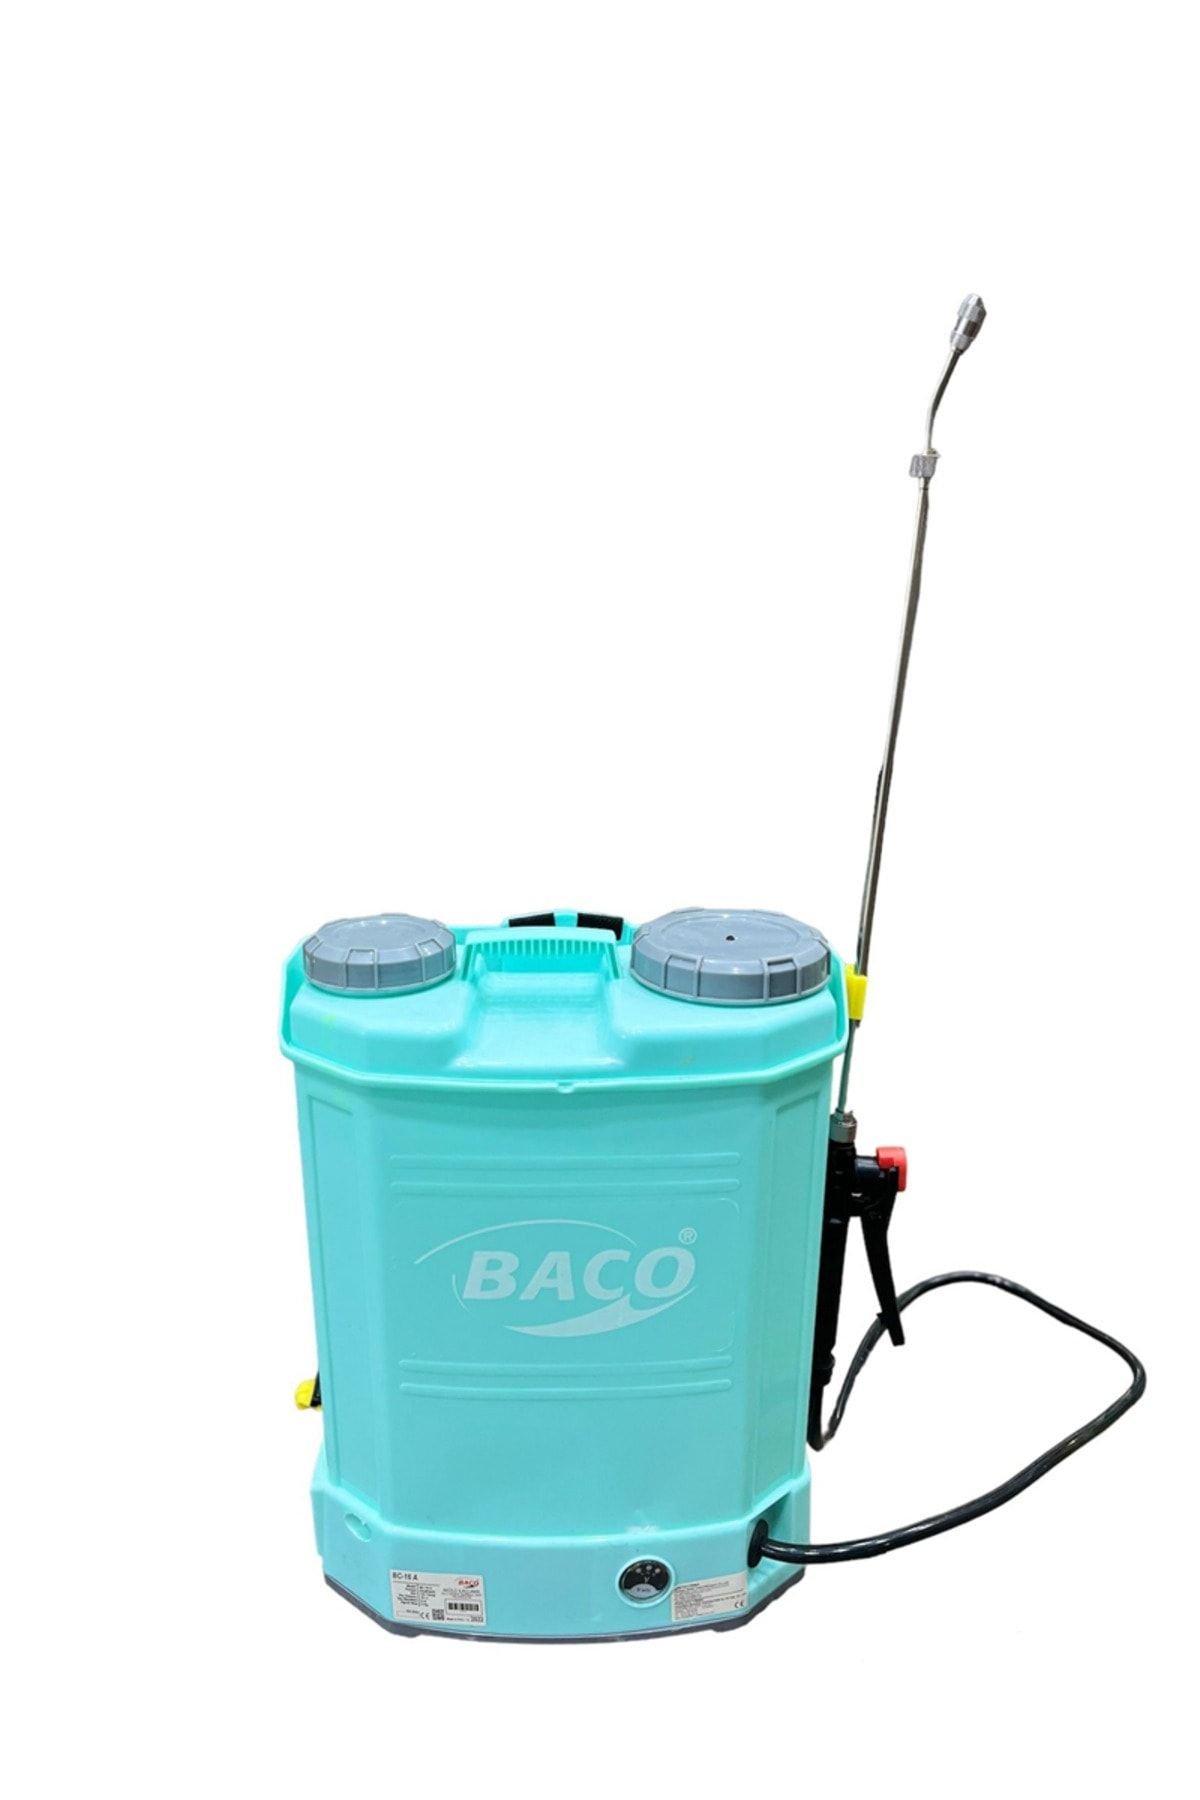 Baco Bc 16 A Şarjlı Akülü Pulverizatör Ilaçlama Pompası 16 Litre Basınç Ayarlı